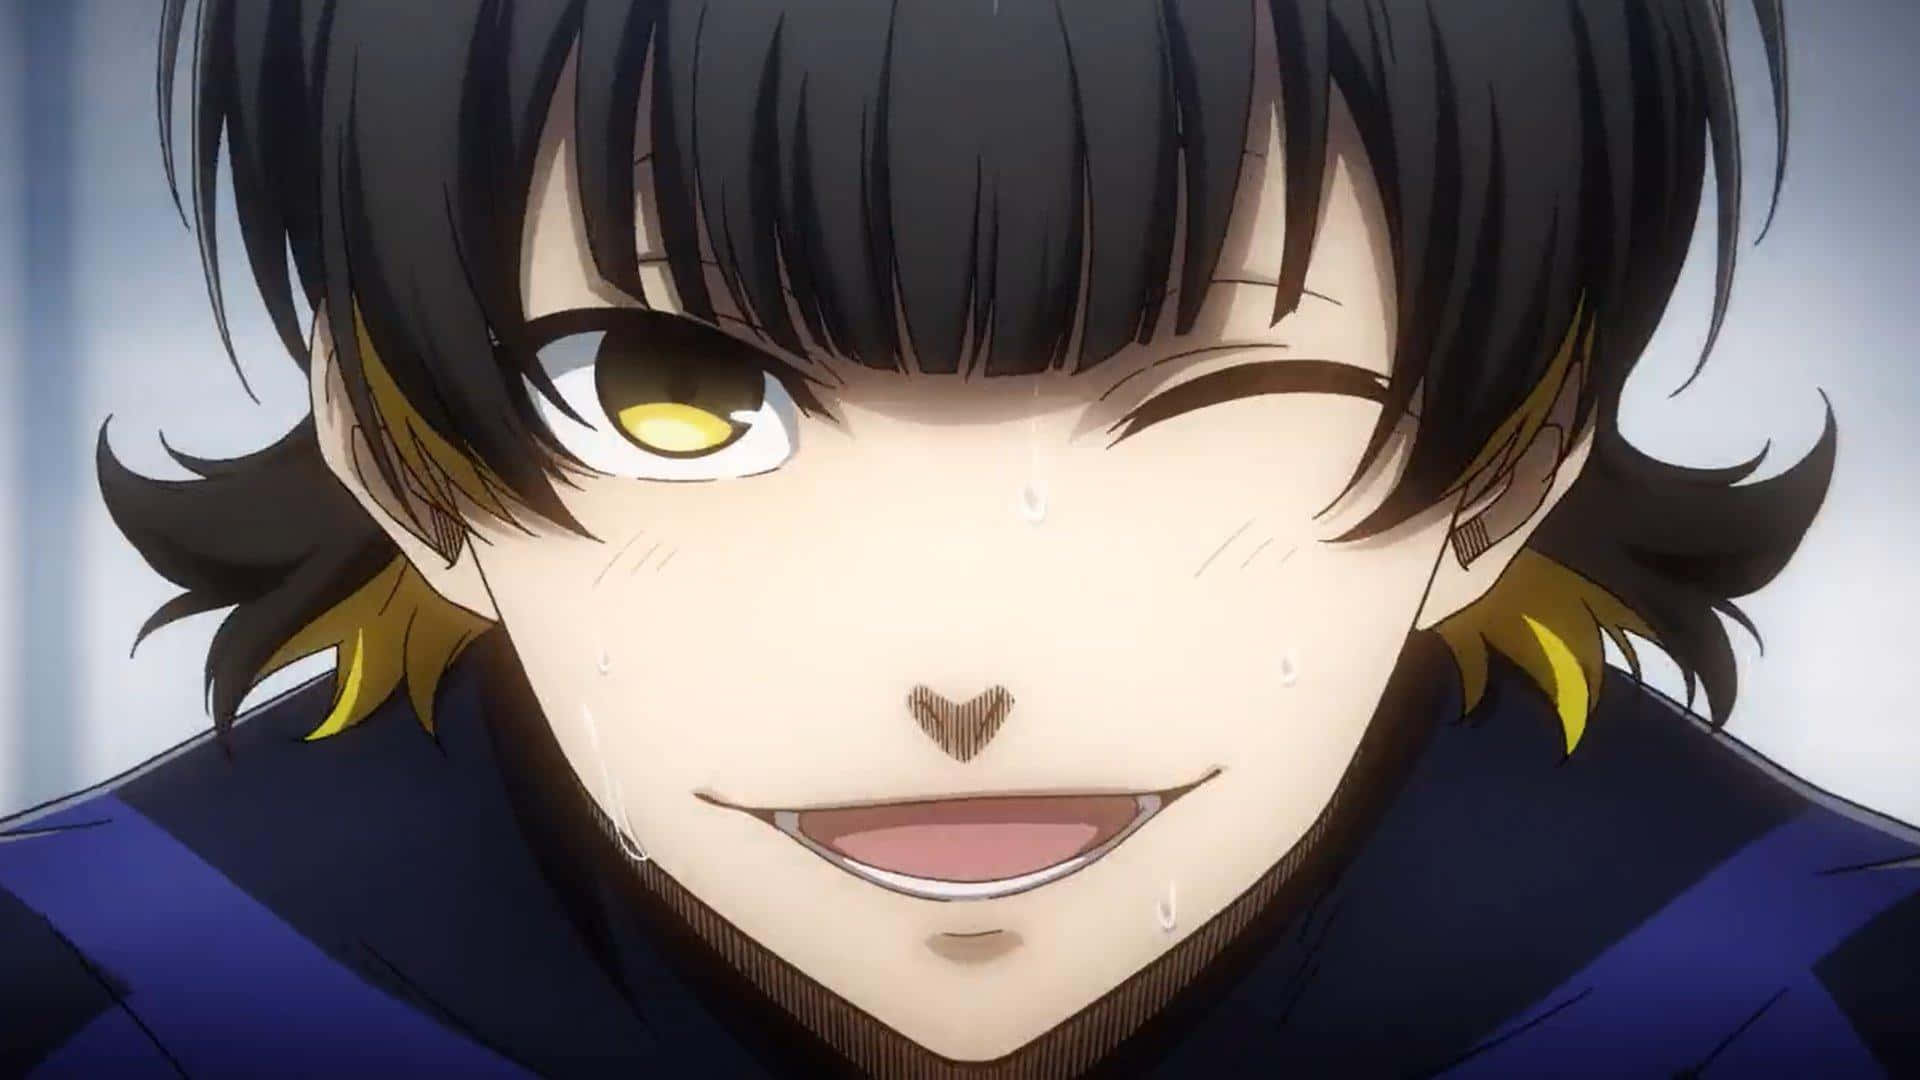 Smirking Anime Characterwith Yellow Eyes Wallpaper